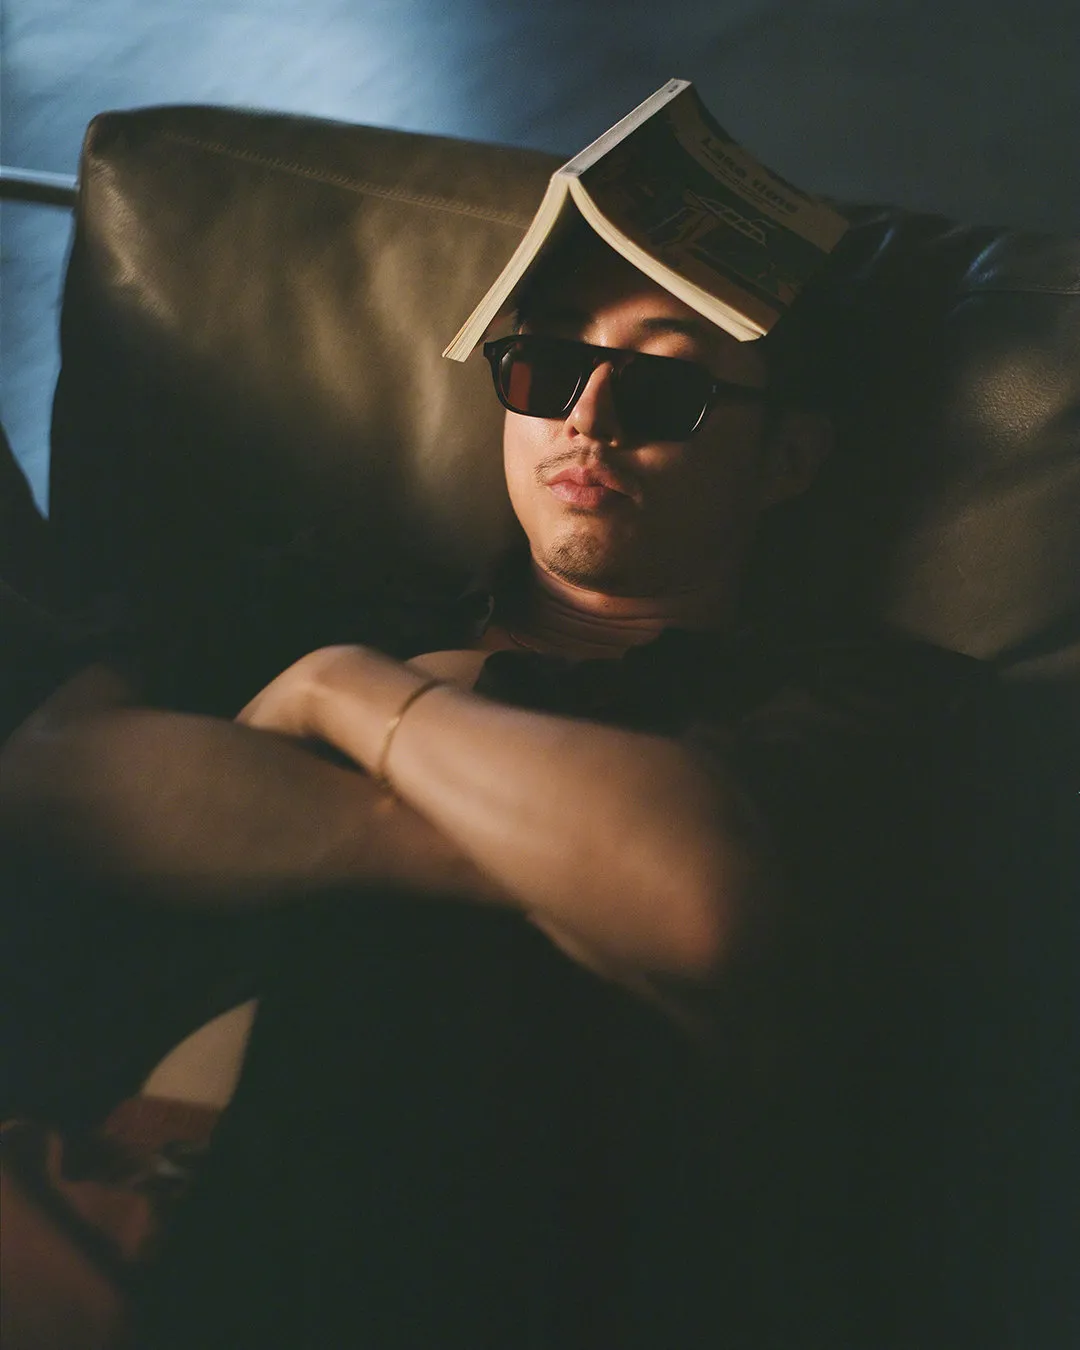 Steven Yeun, "Mr. Porter" magazine new photo | FMV6